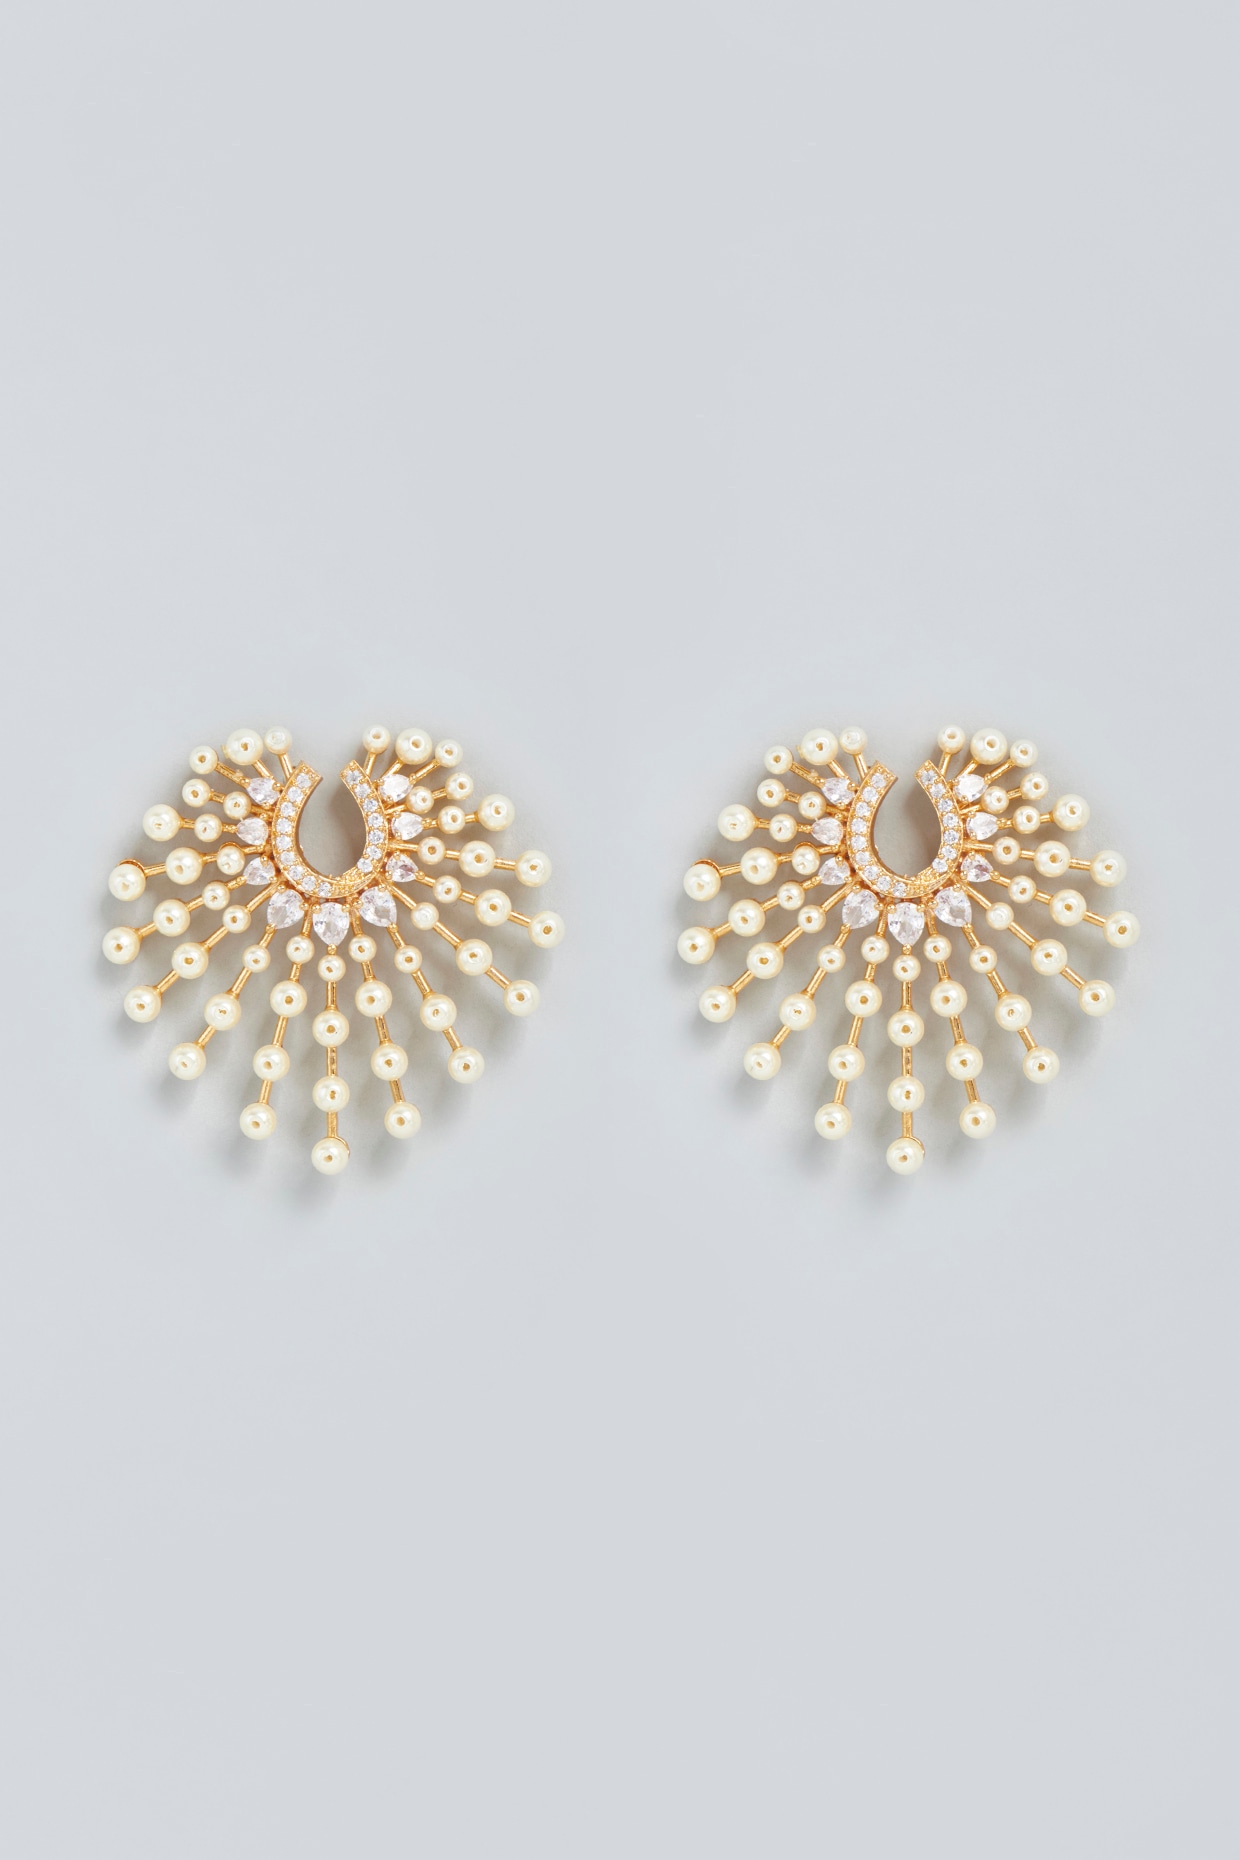 Flipkart.com - Buy JEWERICHE IMITATION Trendy Pearl Earrings Combo Pack For  Girls & women Alloy Hoop Earring Online at Best Prices in India